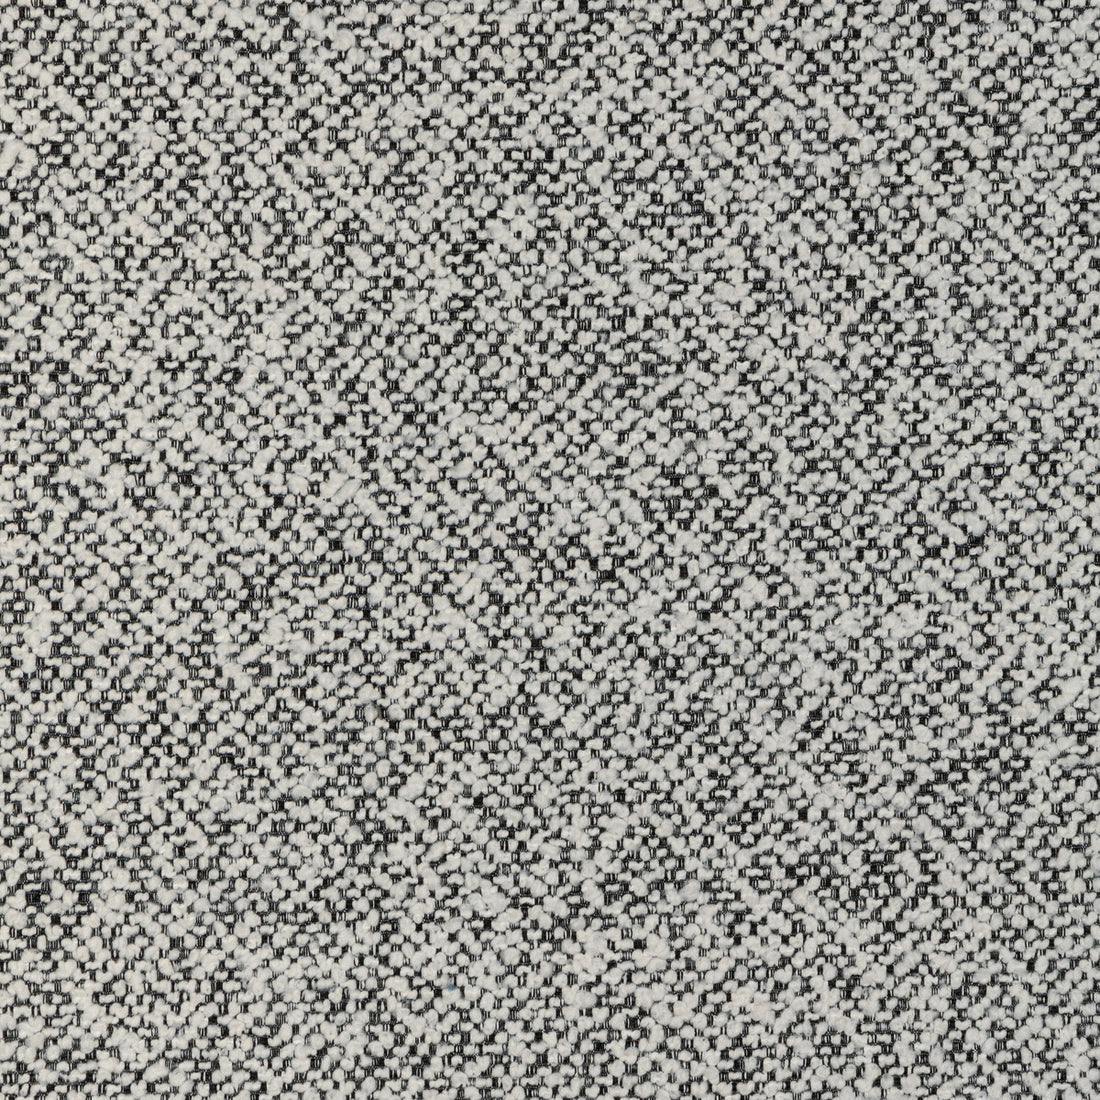 Kravet Smart fabric in 37001-81 color - pattern 37001.81.0 - by Kravet Smart in the Performance Kravetarmor collection